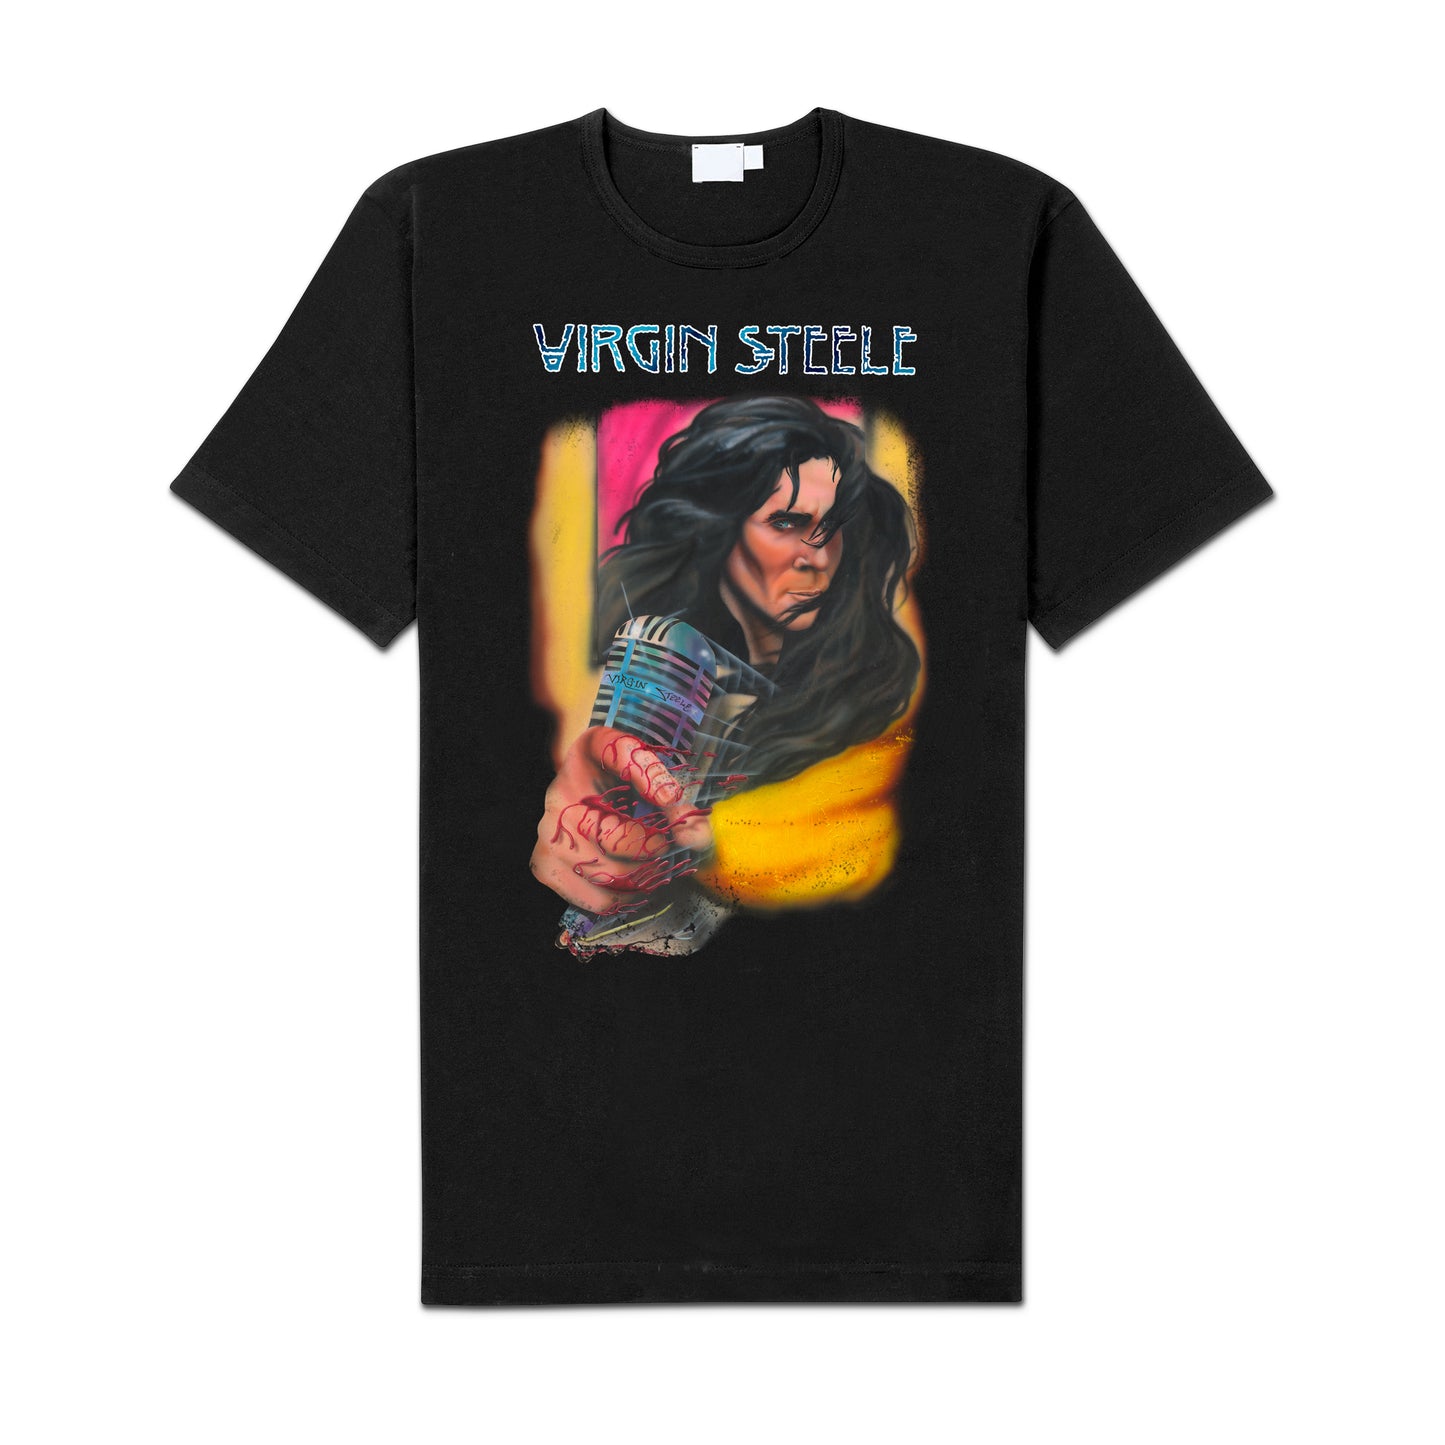 Virgin Steele "David DeFeis" Shirt